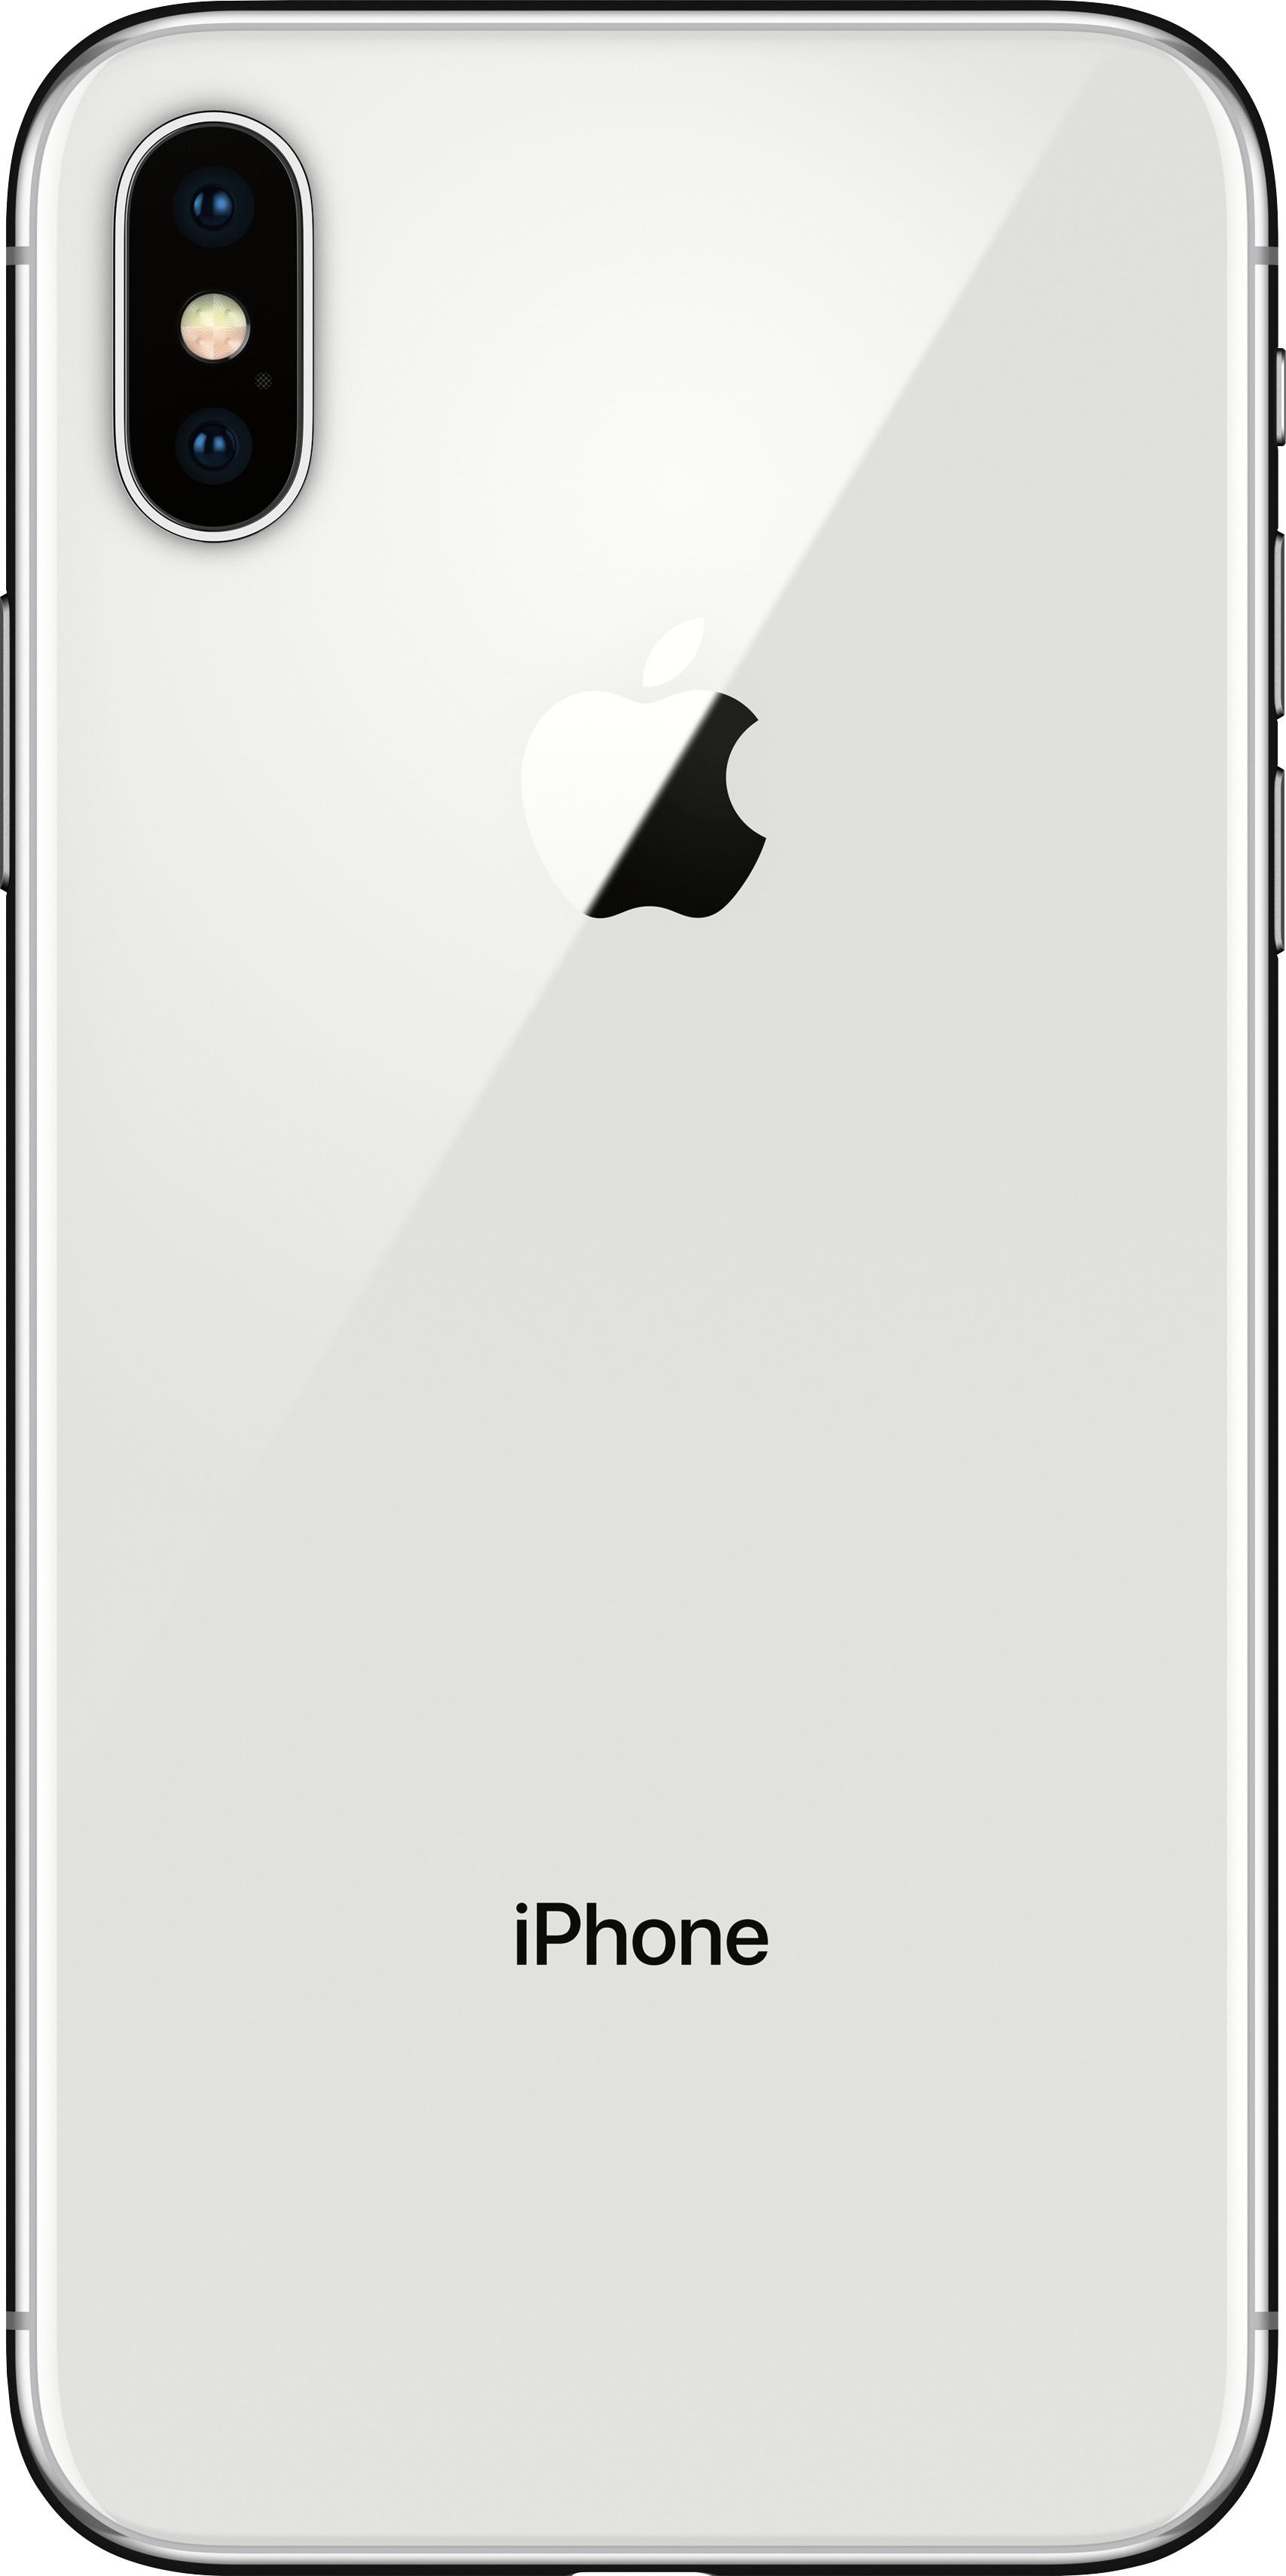 Apple iPhone X 256GB Gray MQA82LL/A - Best Buy